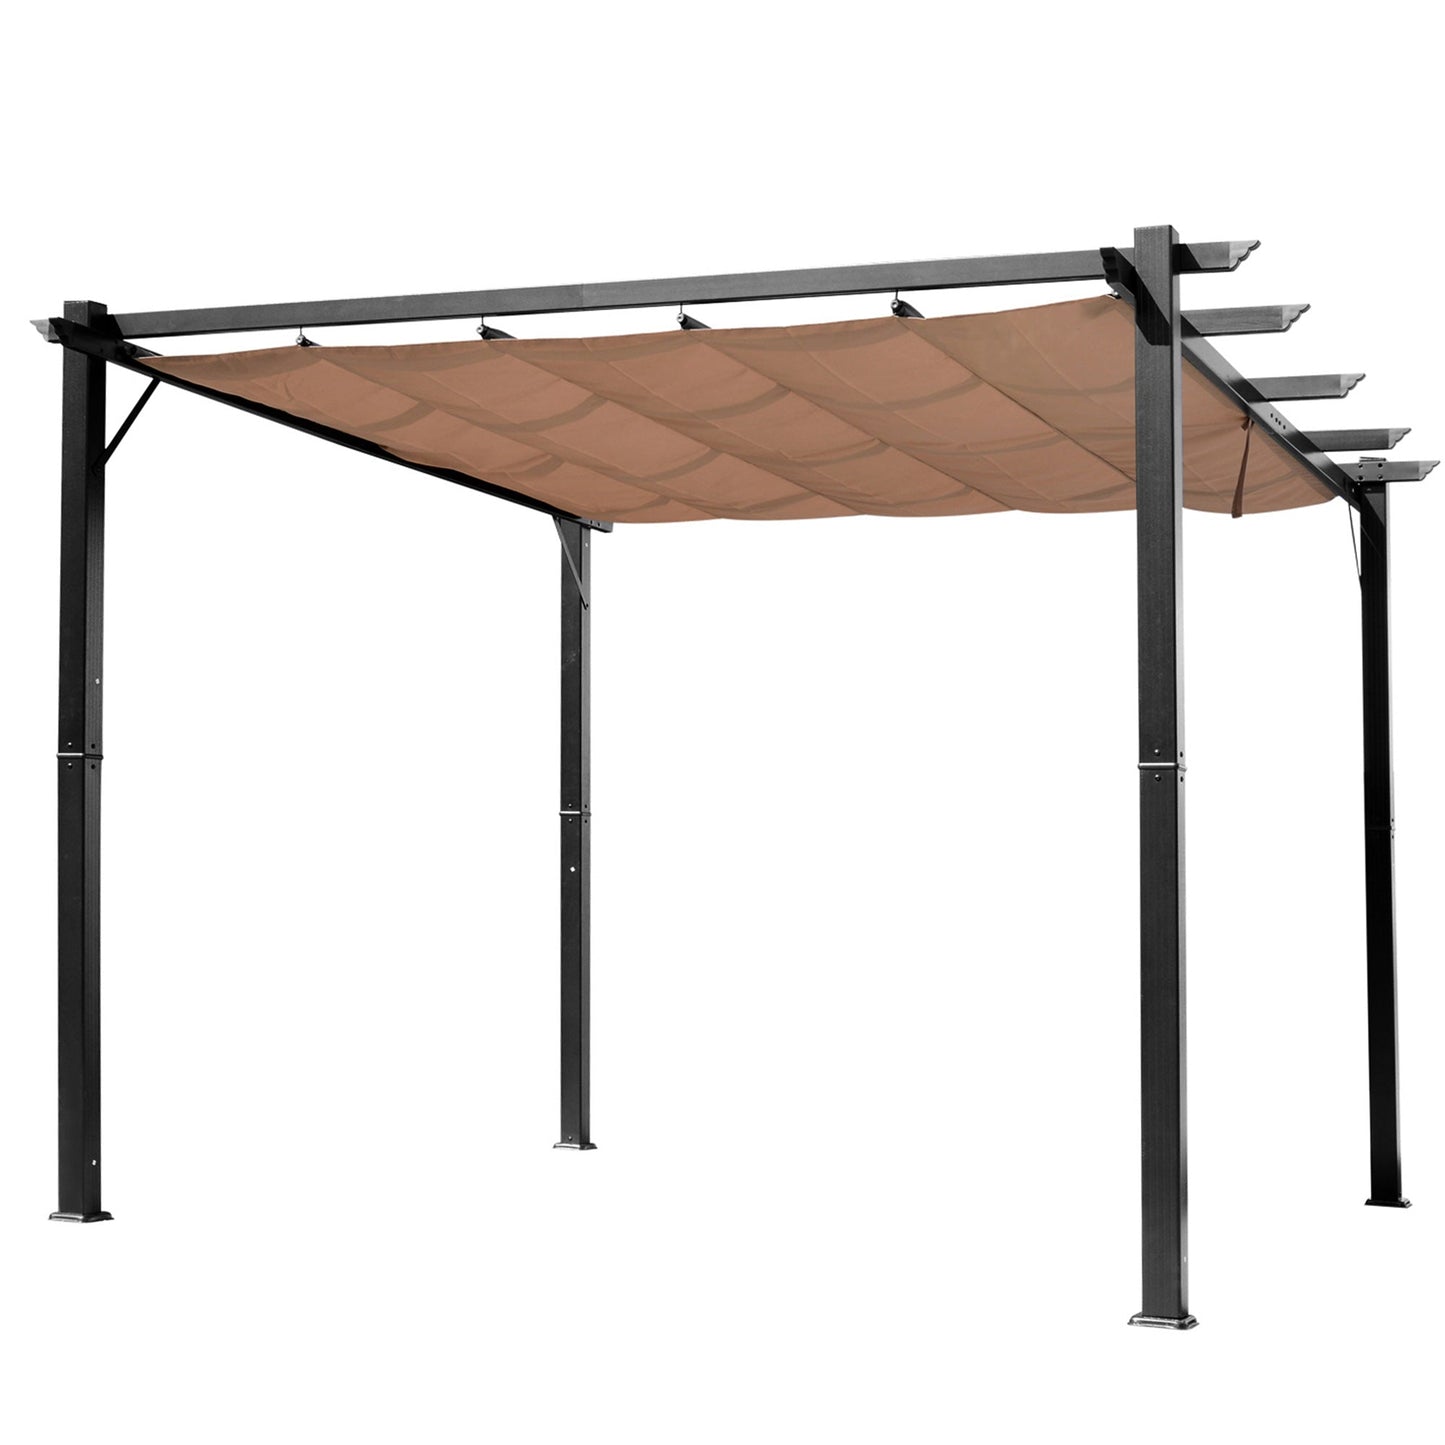 -Outsunny 10' x 13' Outdoor Retractable Pergola Canopy, Aluminum Patio Pergola, Backyard Shade Shelter for Porch Party, Grill Gazebo - Charcoal Grey - Outdoor Style Company